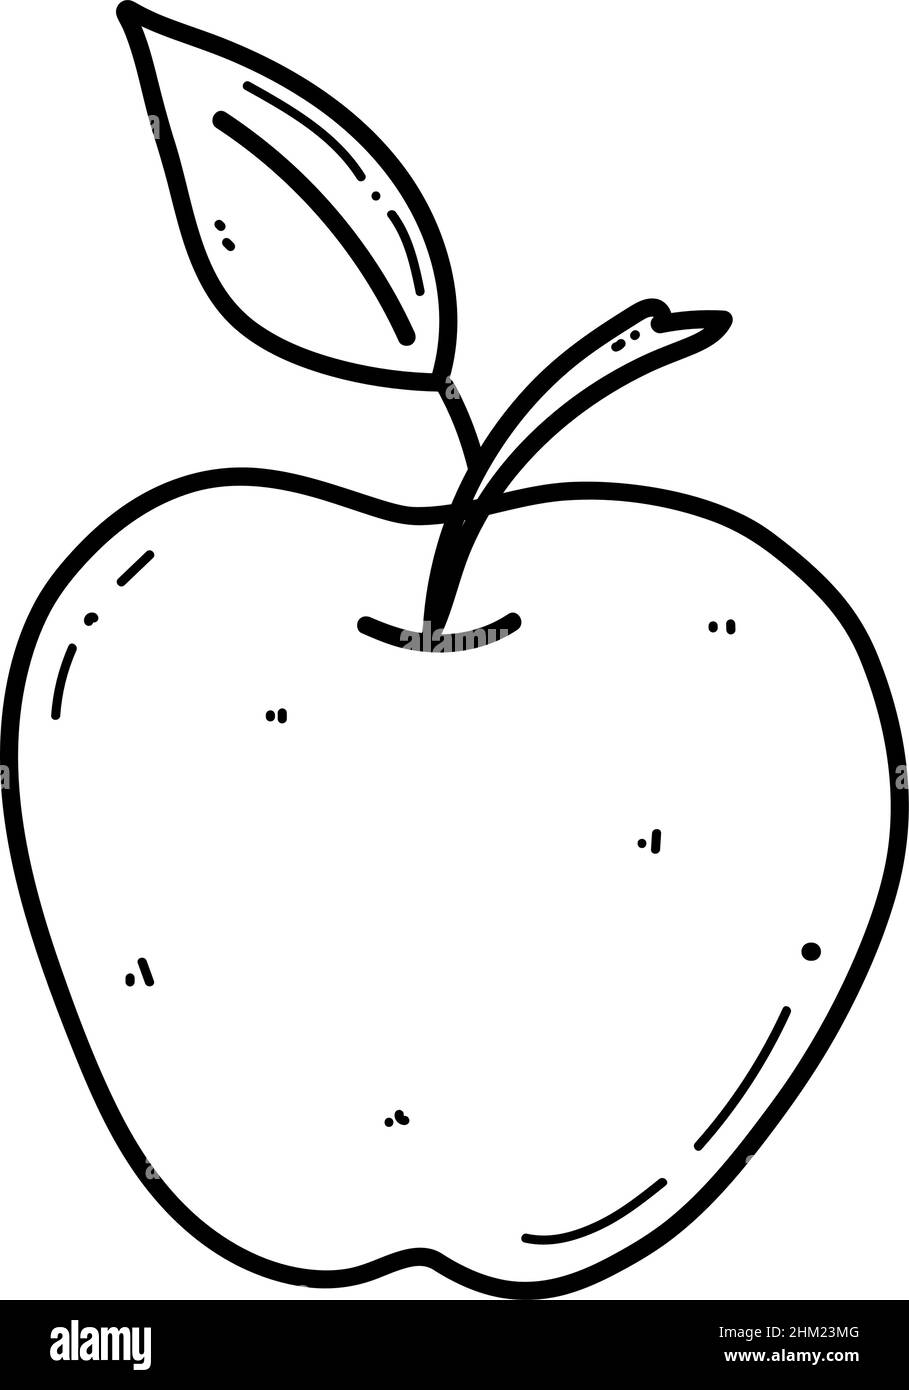 Vektor Apfel Doodle Illustration. Obst-Illustration für Bauernmarkt-Menü. Gesundes Lebensmitteldesign Stock Vektor